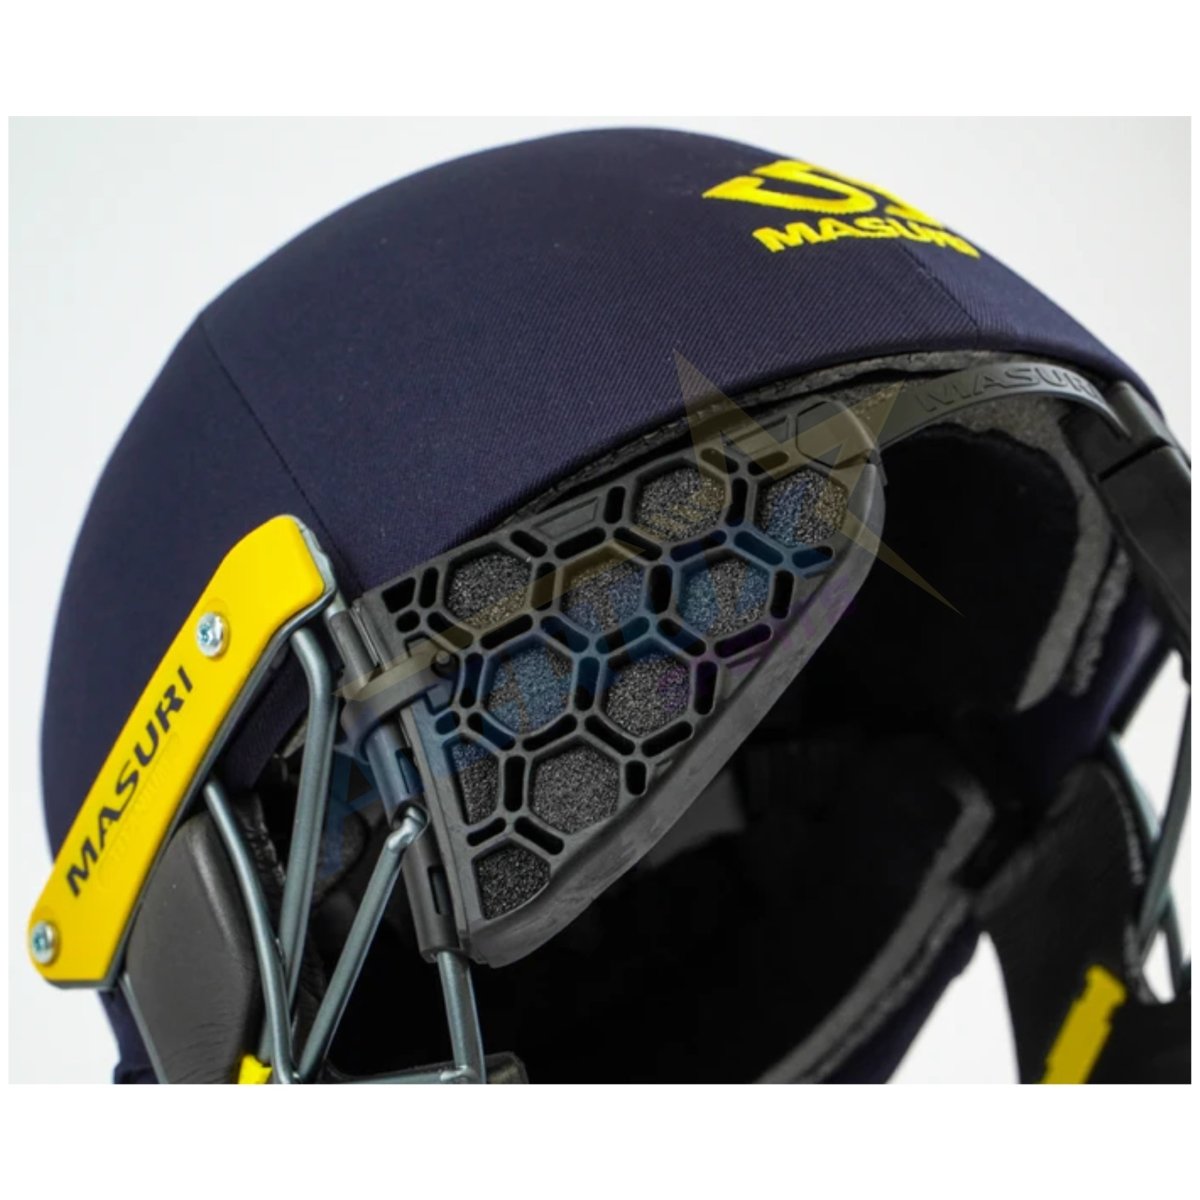 Masuri T Line Titanium Cricket Helmet - Acrux Sports